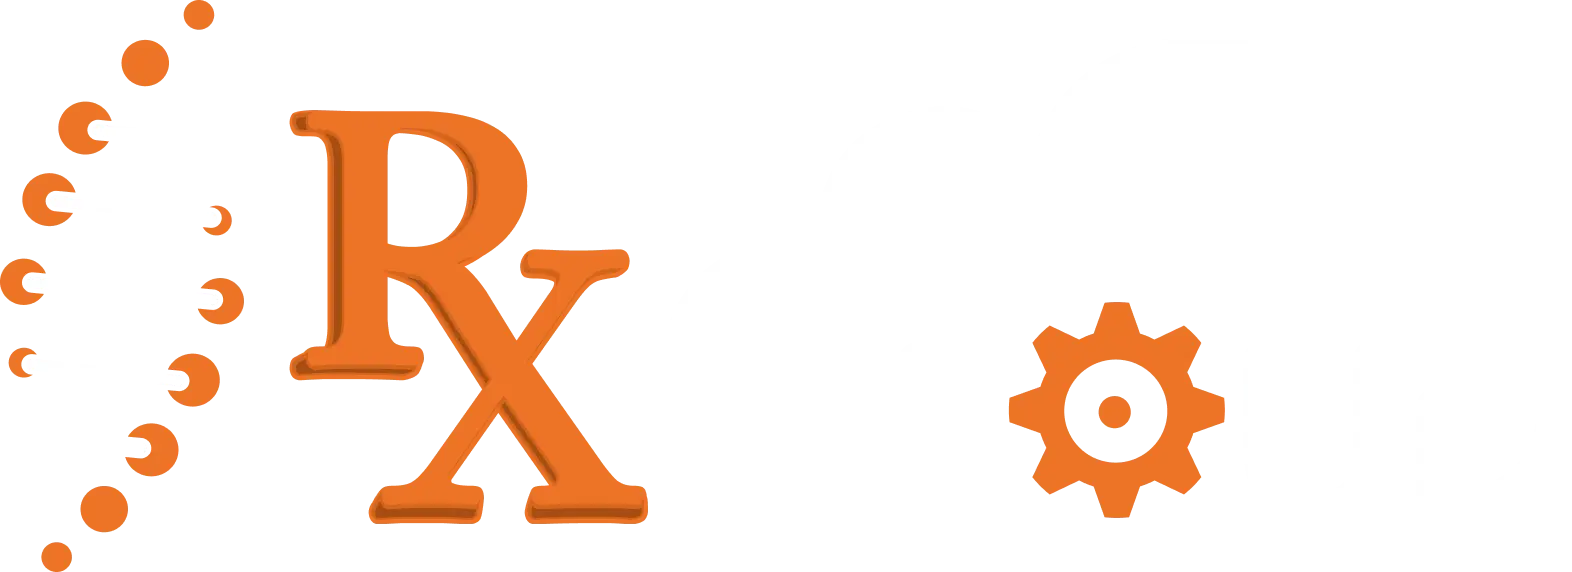 Rx cloud logo